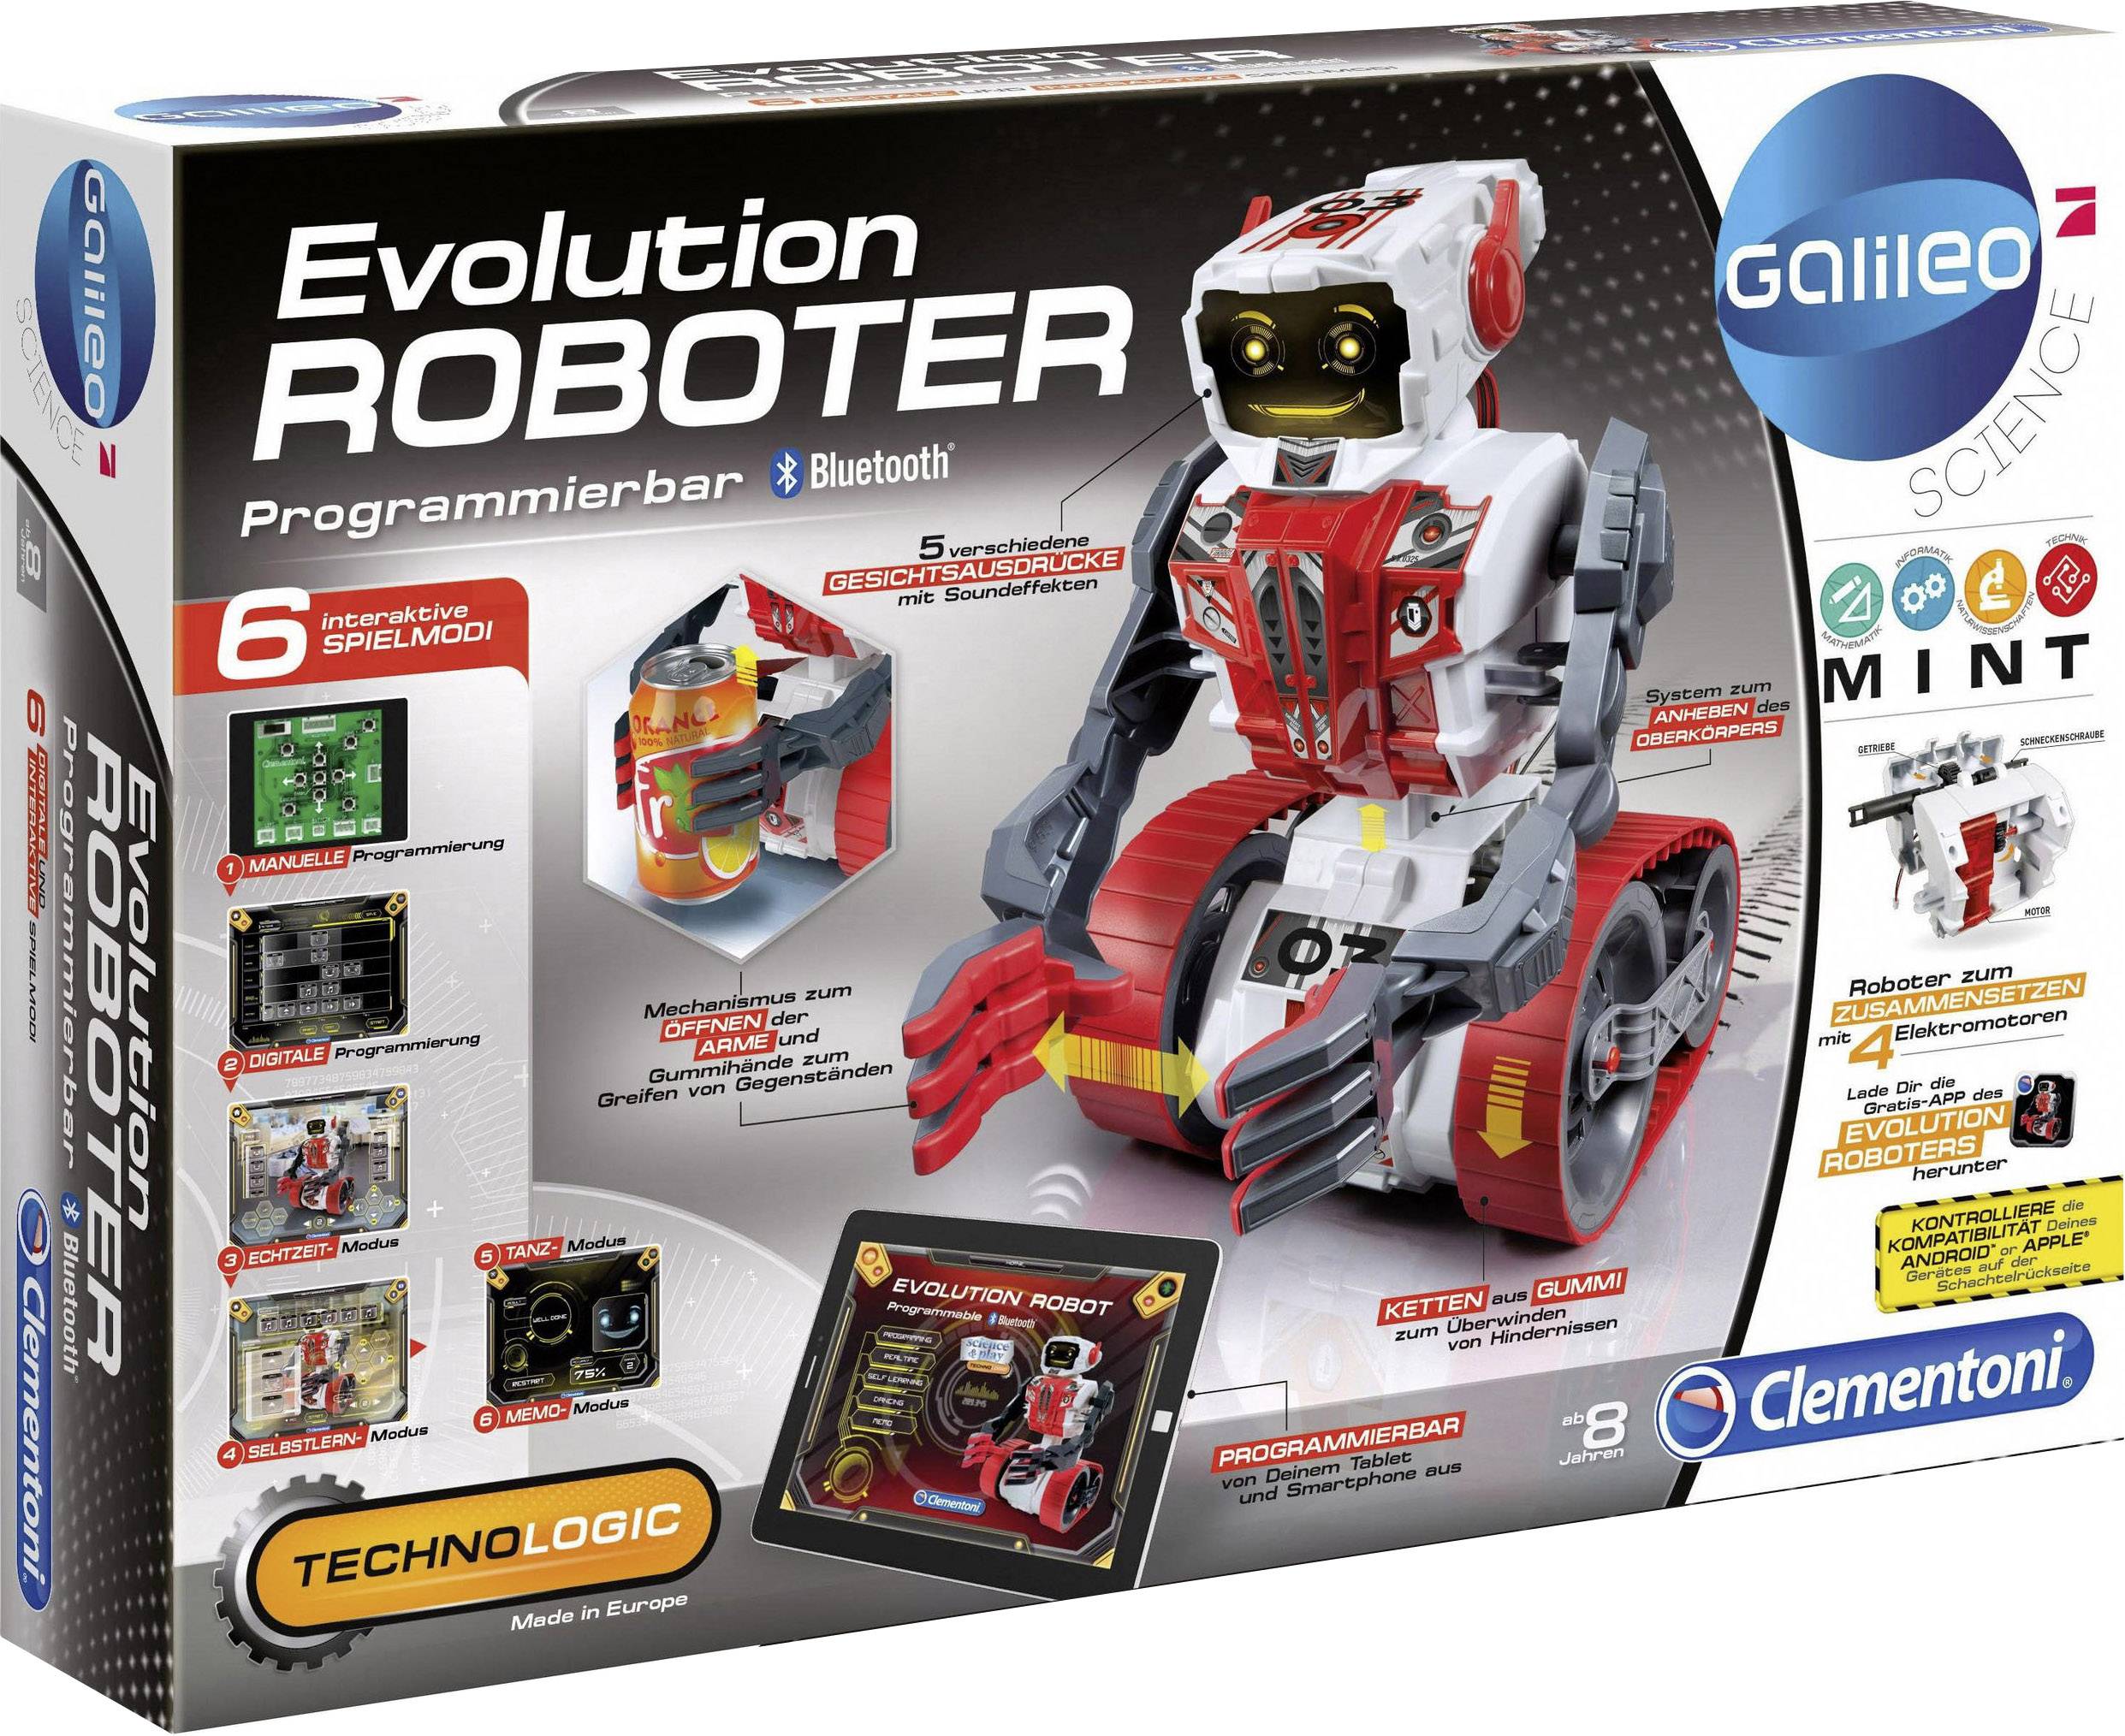 Robot assembly Galileo Roboter Assembly kit, Game robot 38115456 Conrad.com